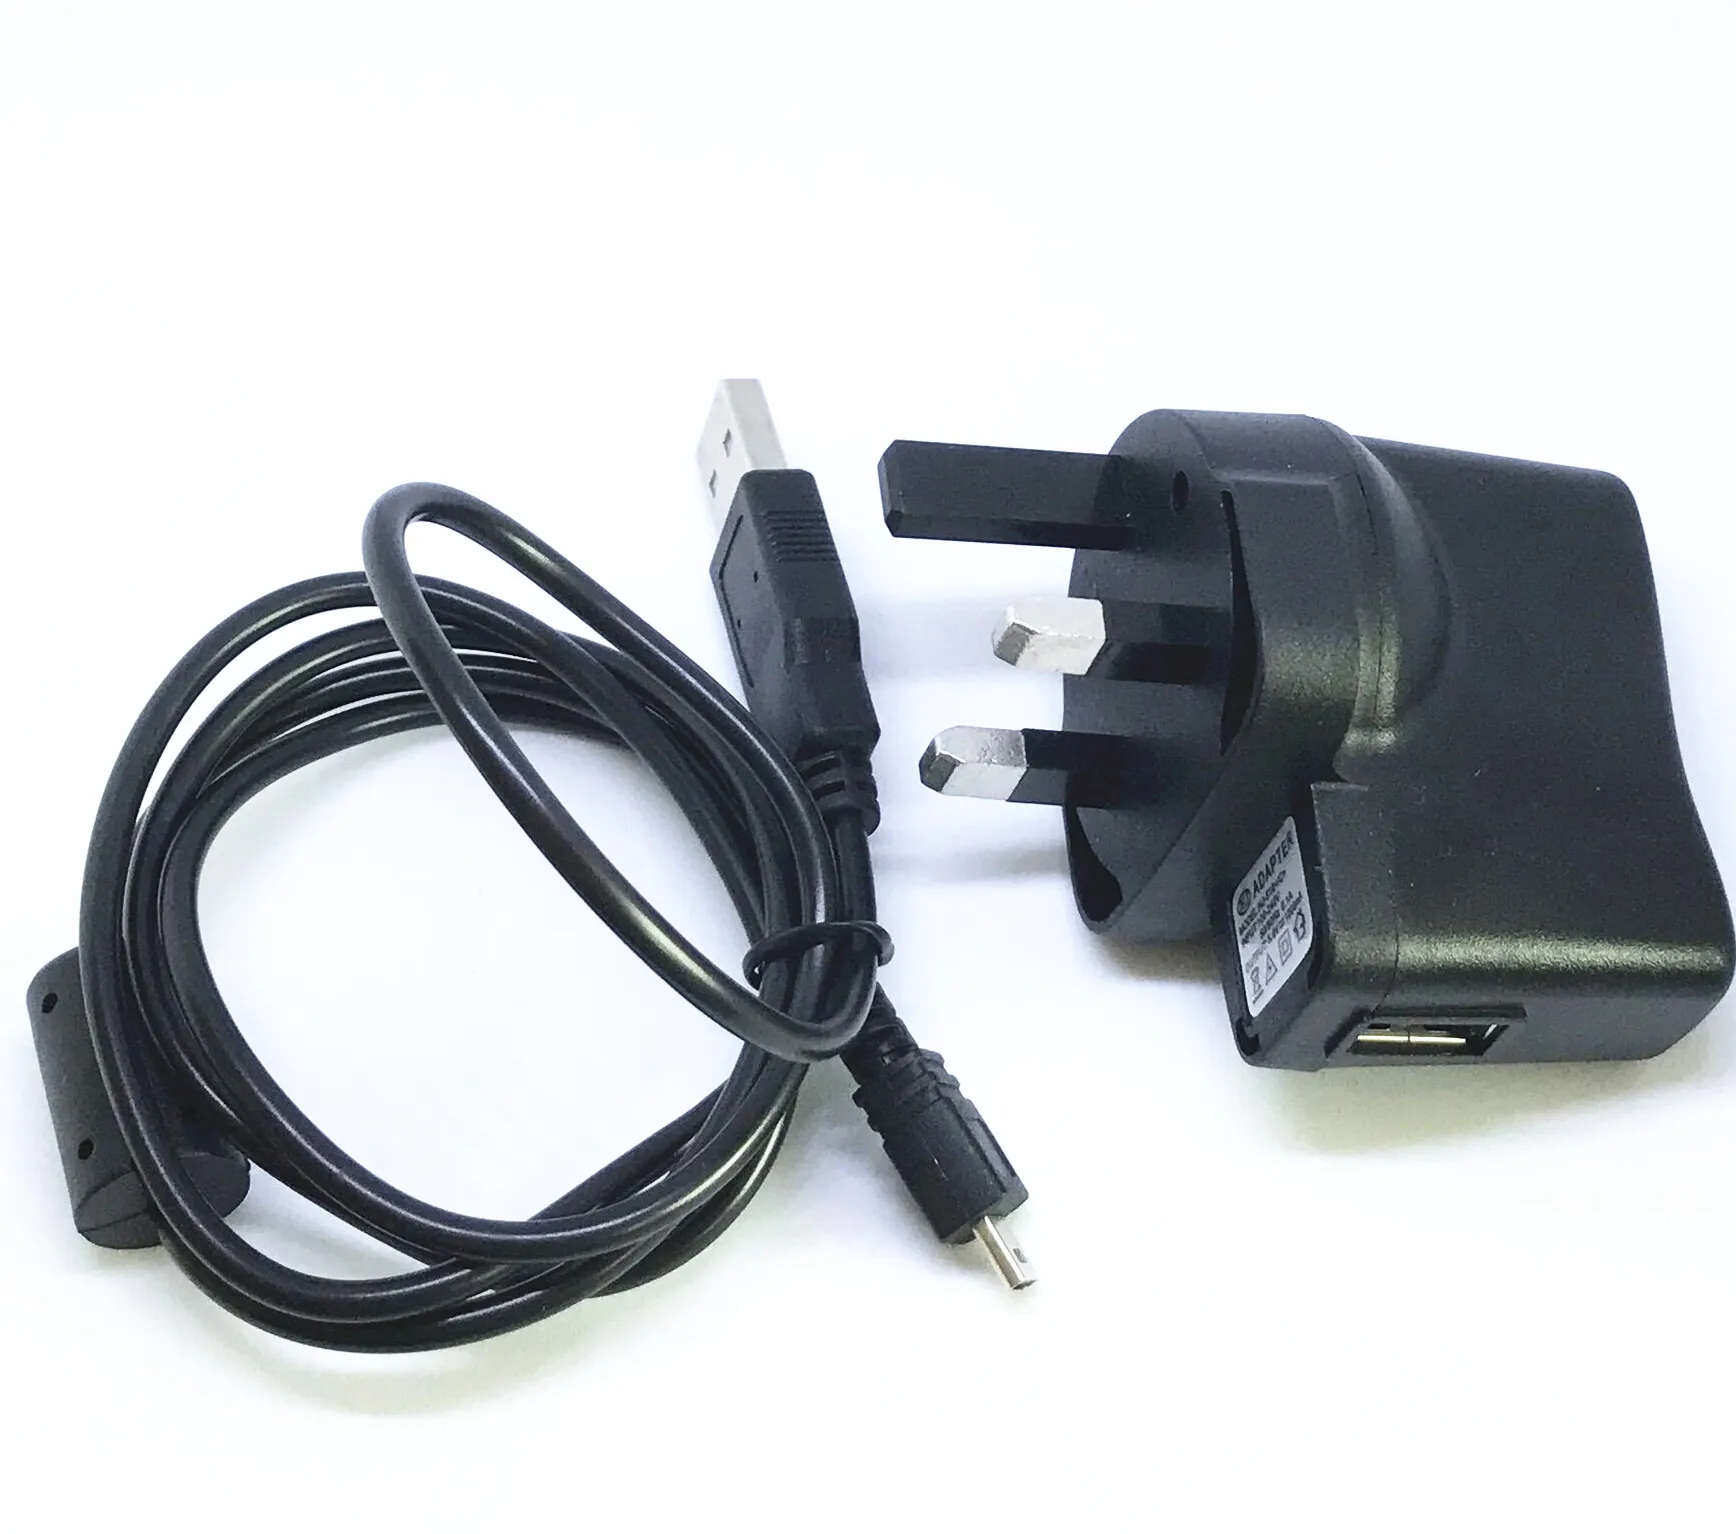 USB AC/DC адаптер питания камера зарядное устройство+ шнур для ПК для RICOH GR2 GRII GR II - Цвет: UK PLUG